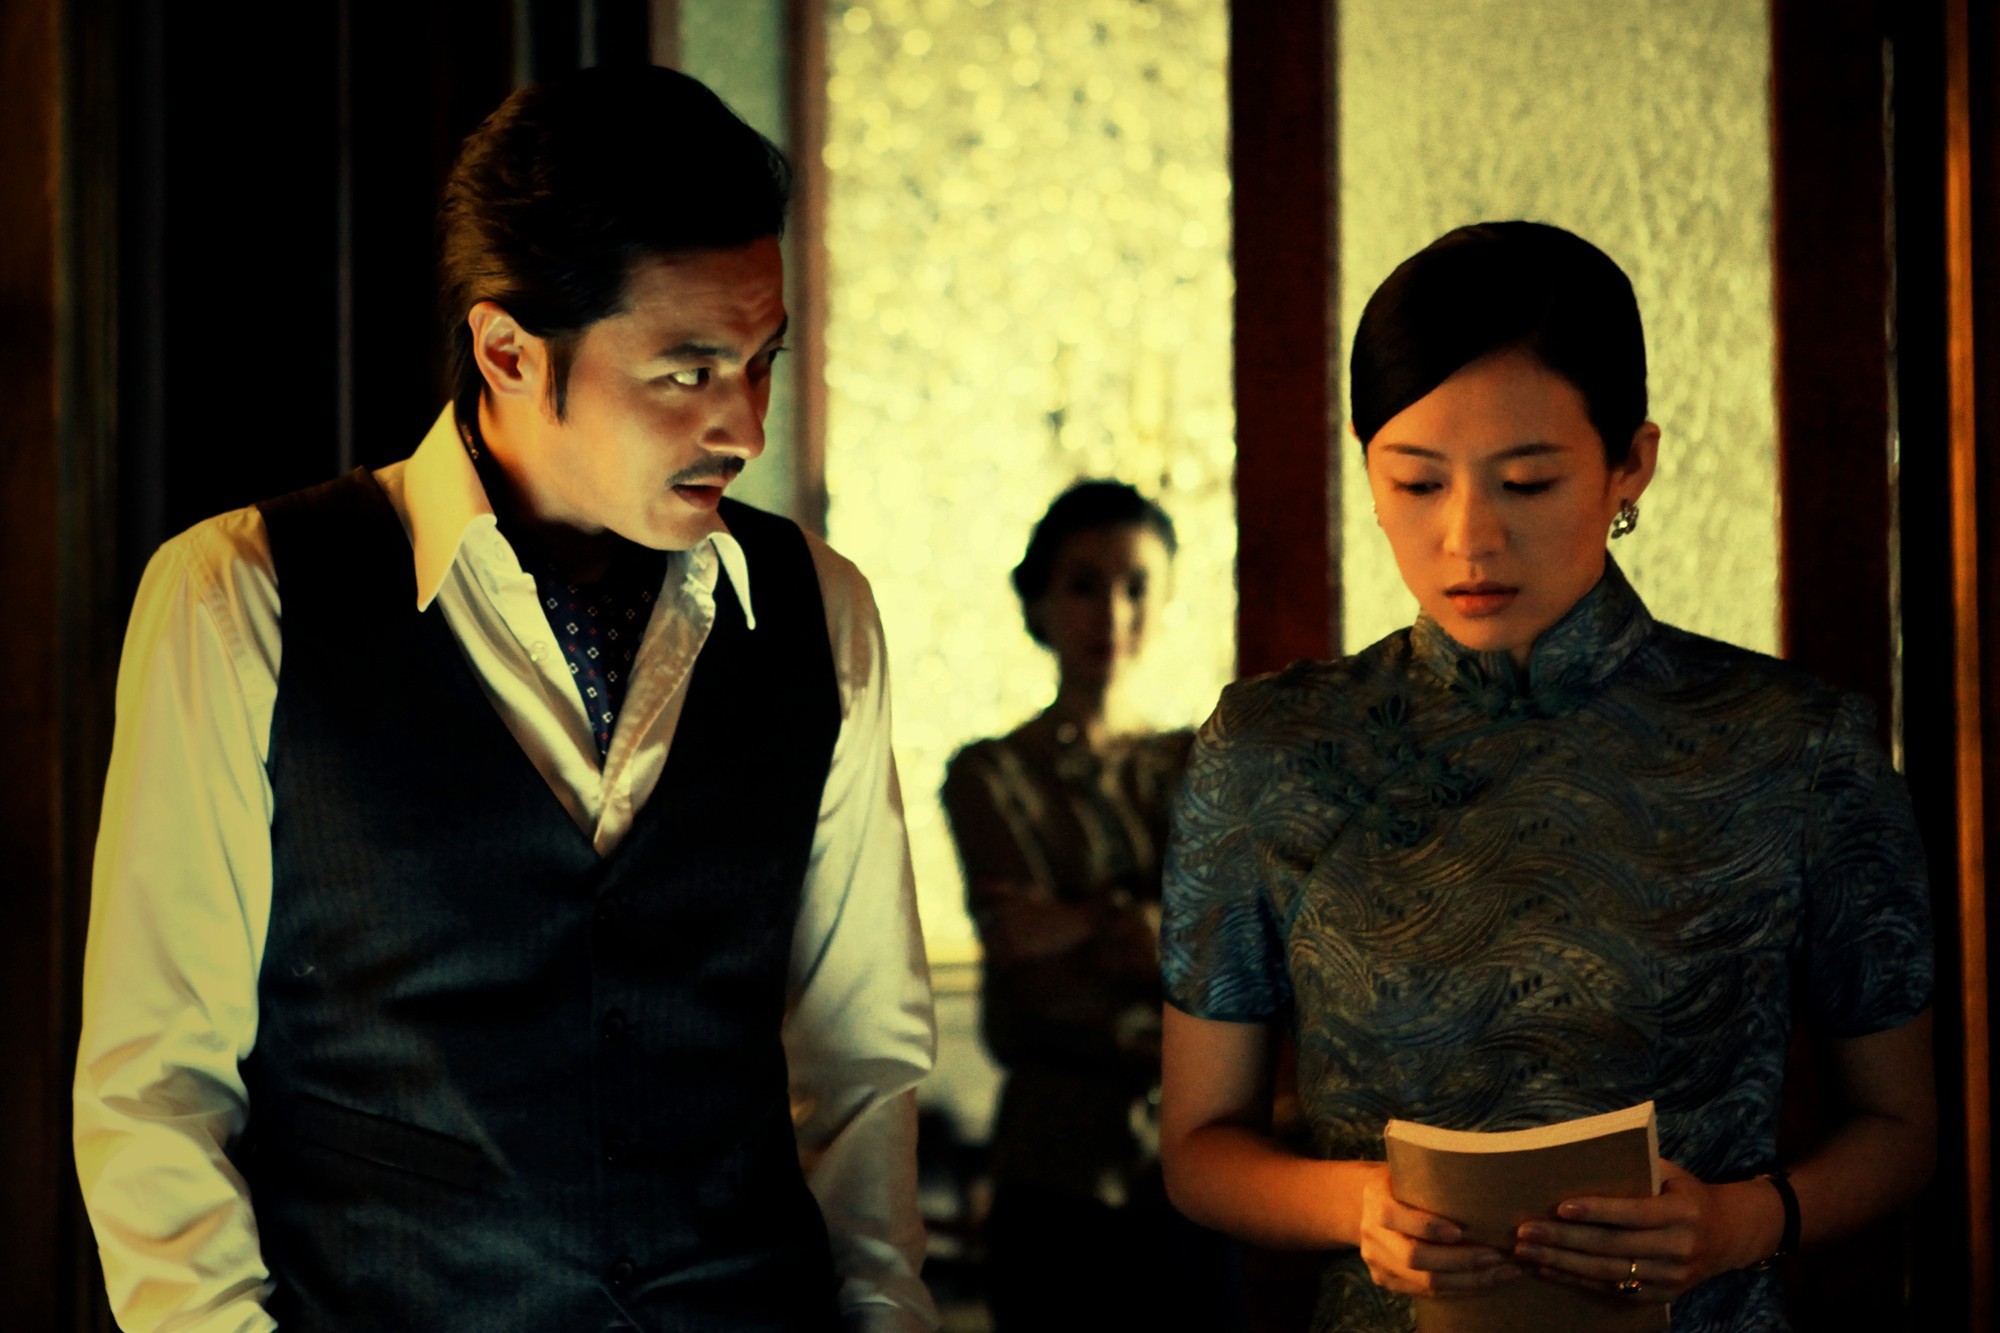 Jang Dong Gun and Zhang Ziyi in Well Go USA's Dangerous Liaisons (2012)